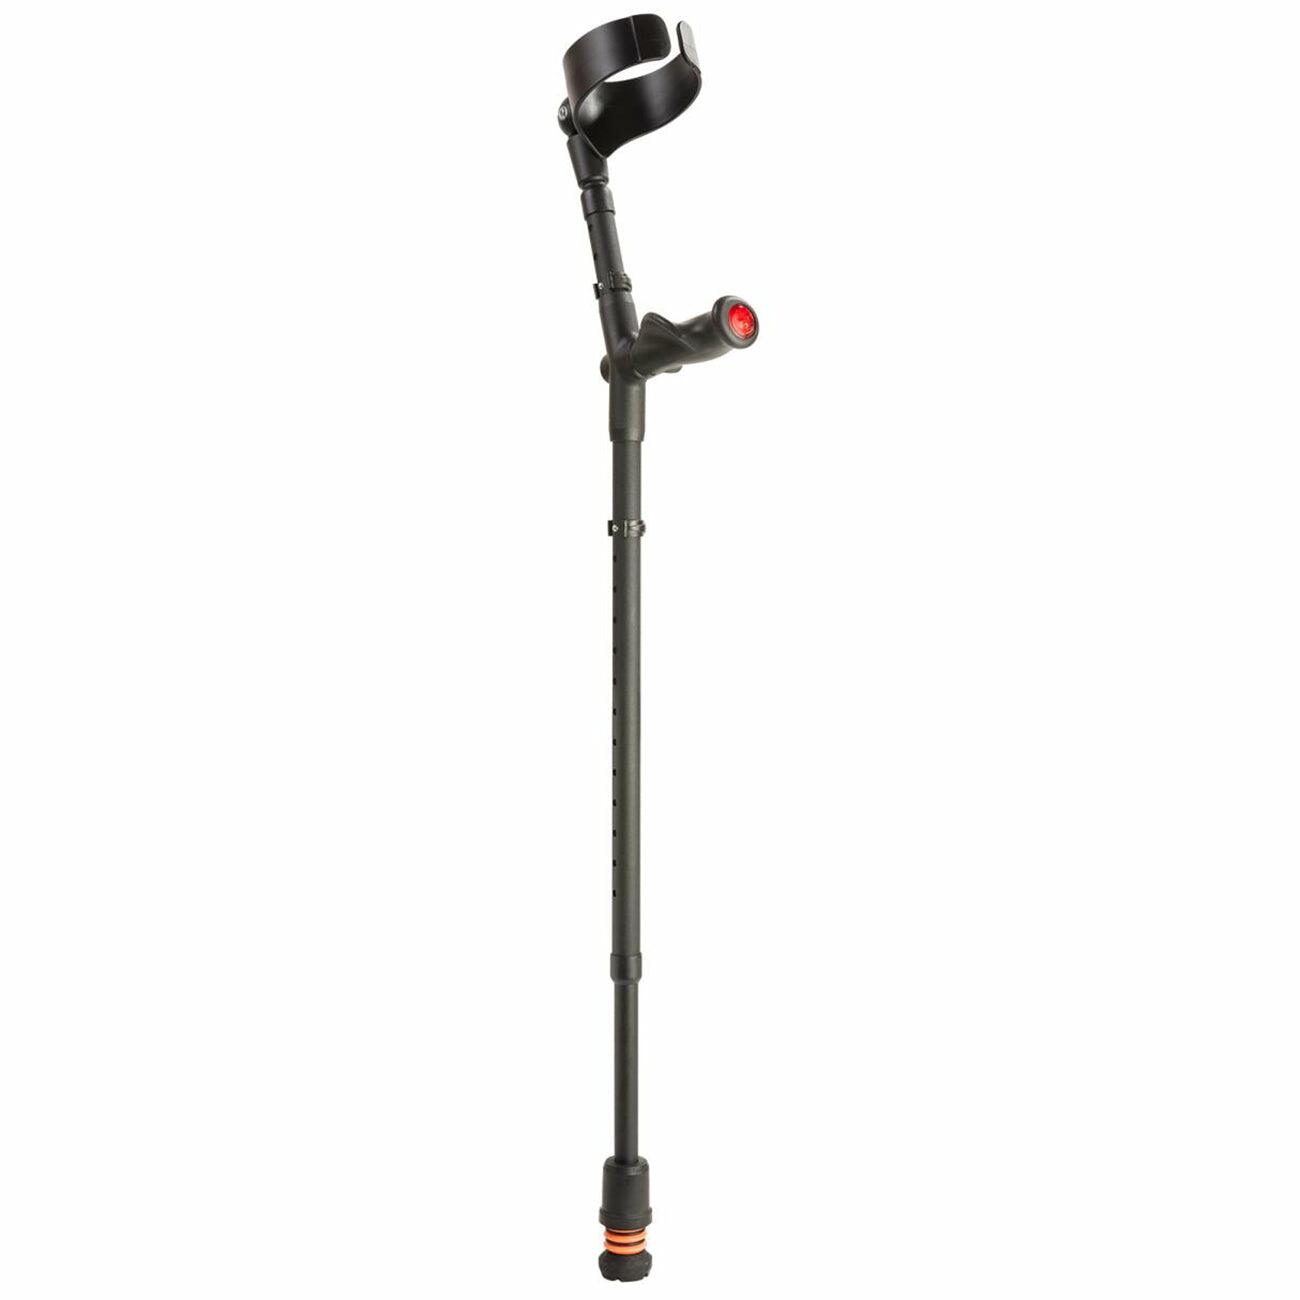 A single black Flexyfoot Comfort Grip Double Adjustable Crutch